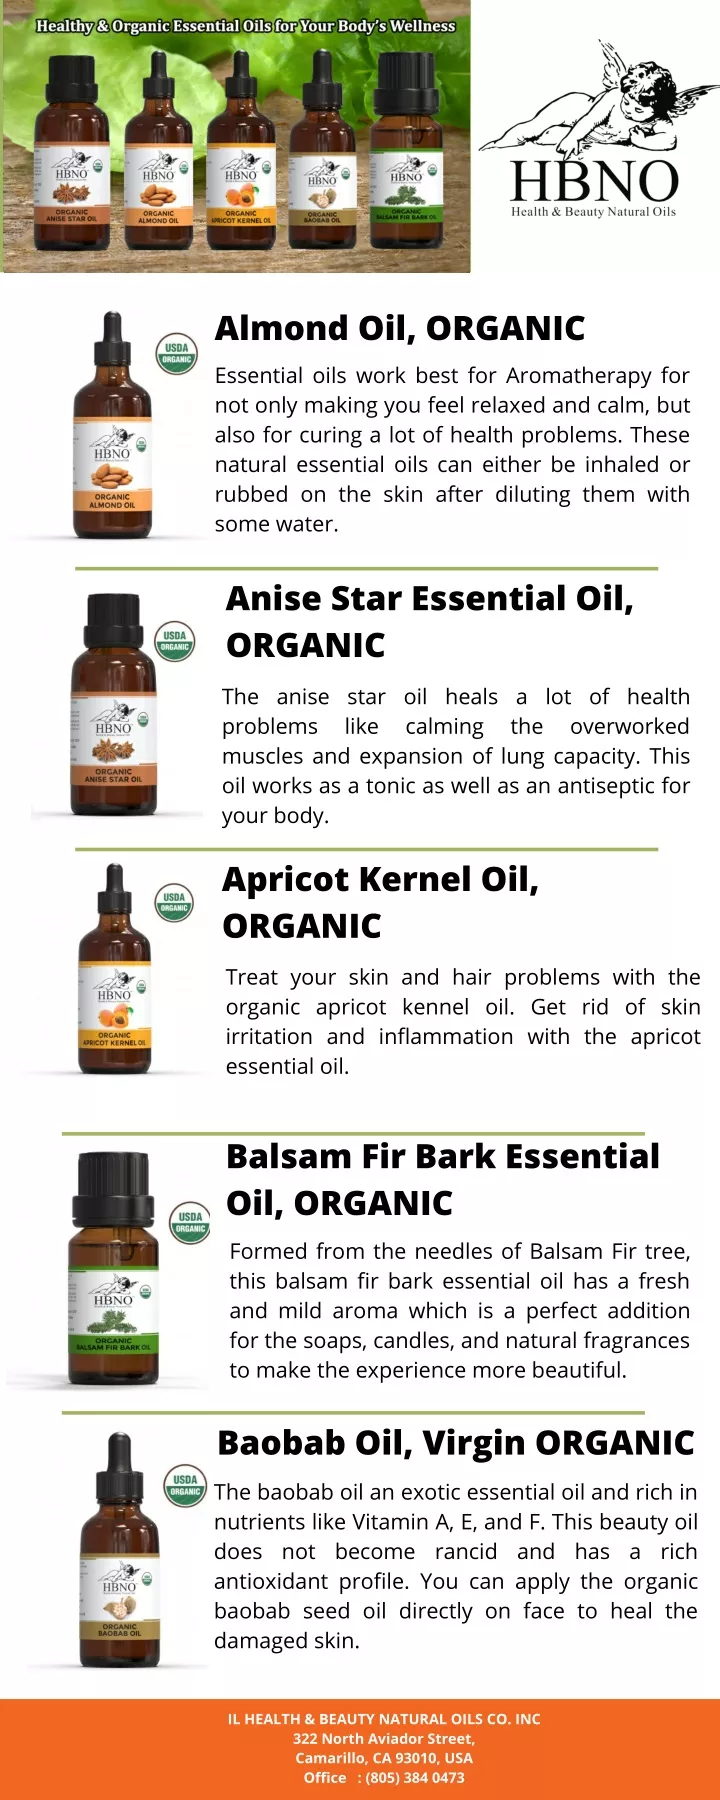 almond oil organic essential oils work best